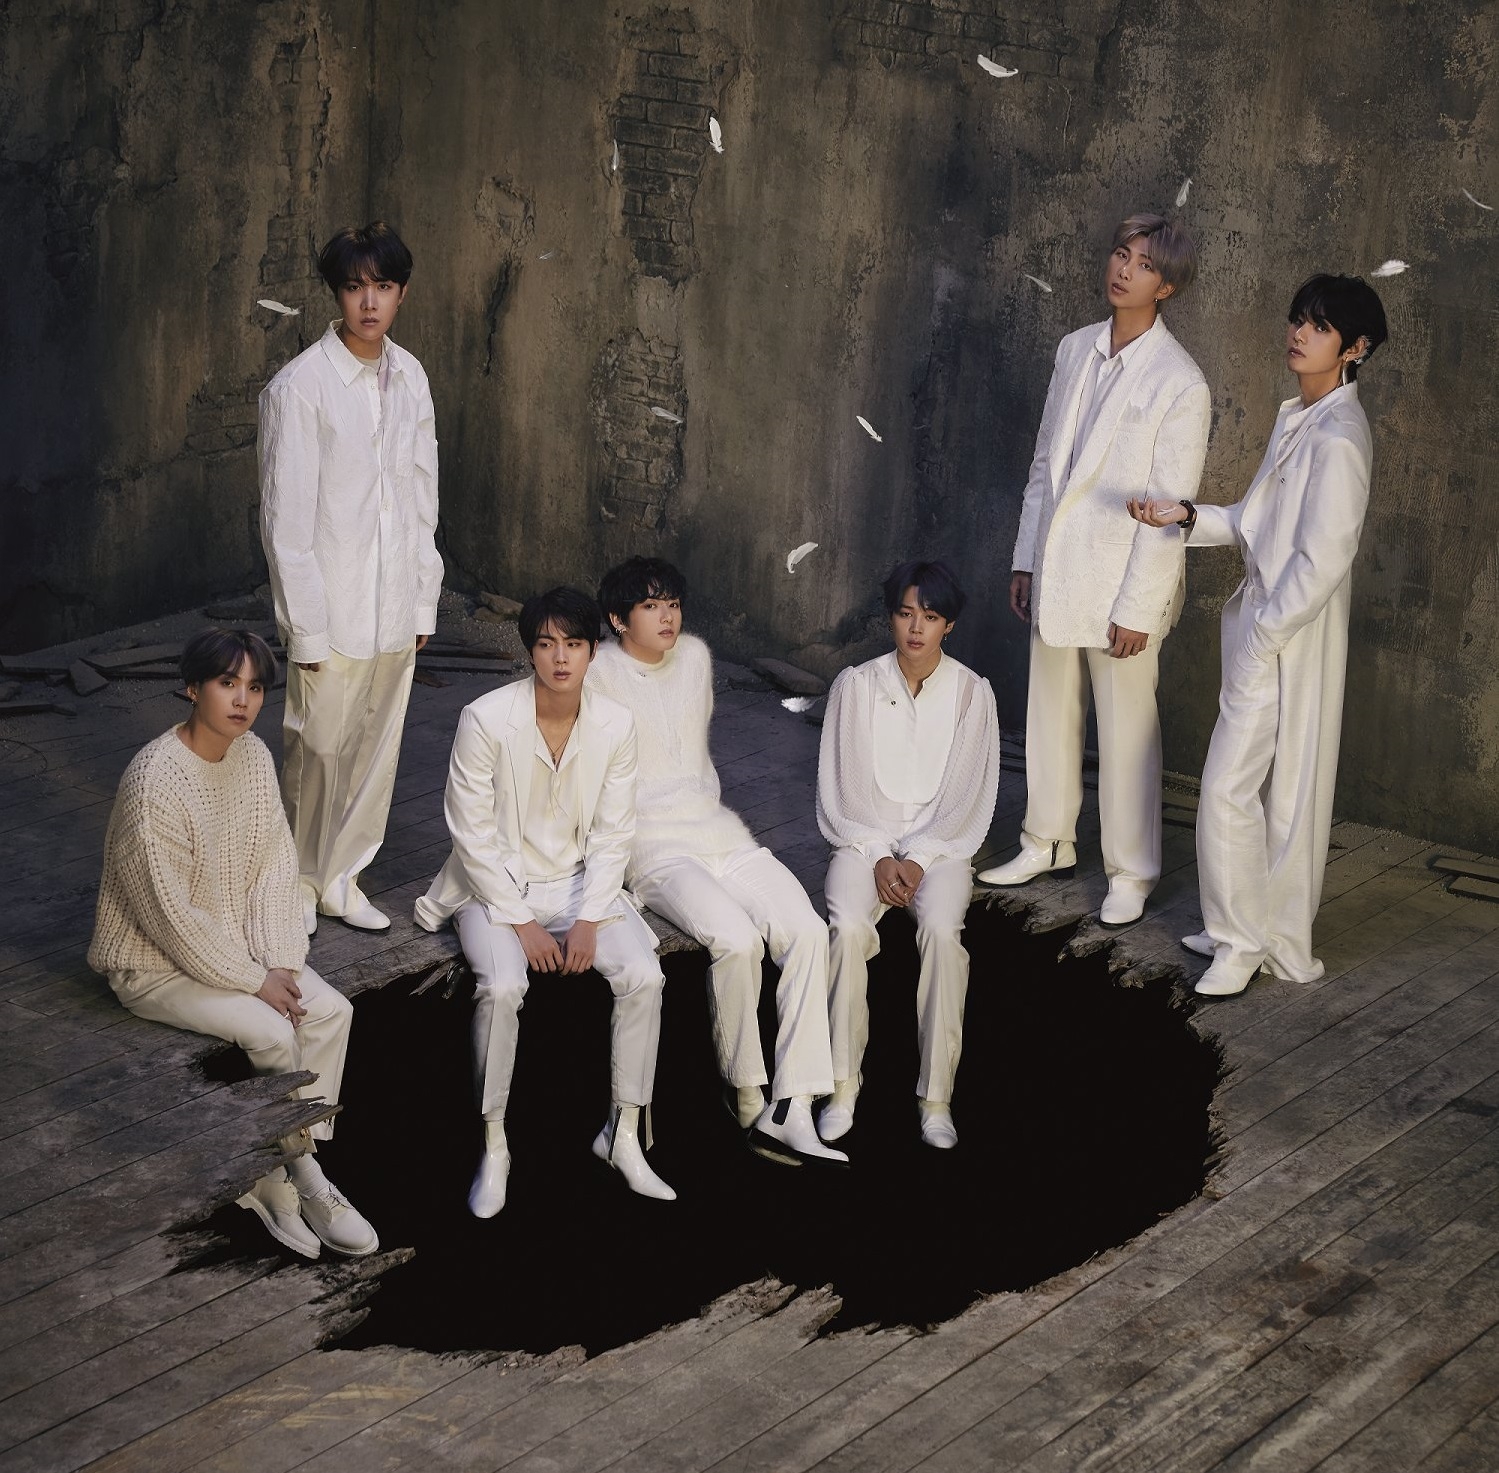 k pop boyband bts unveils new concept photos for upcoming album